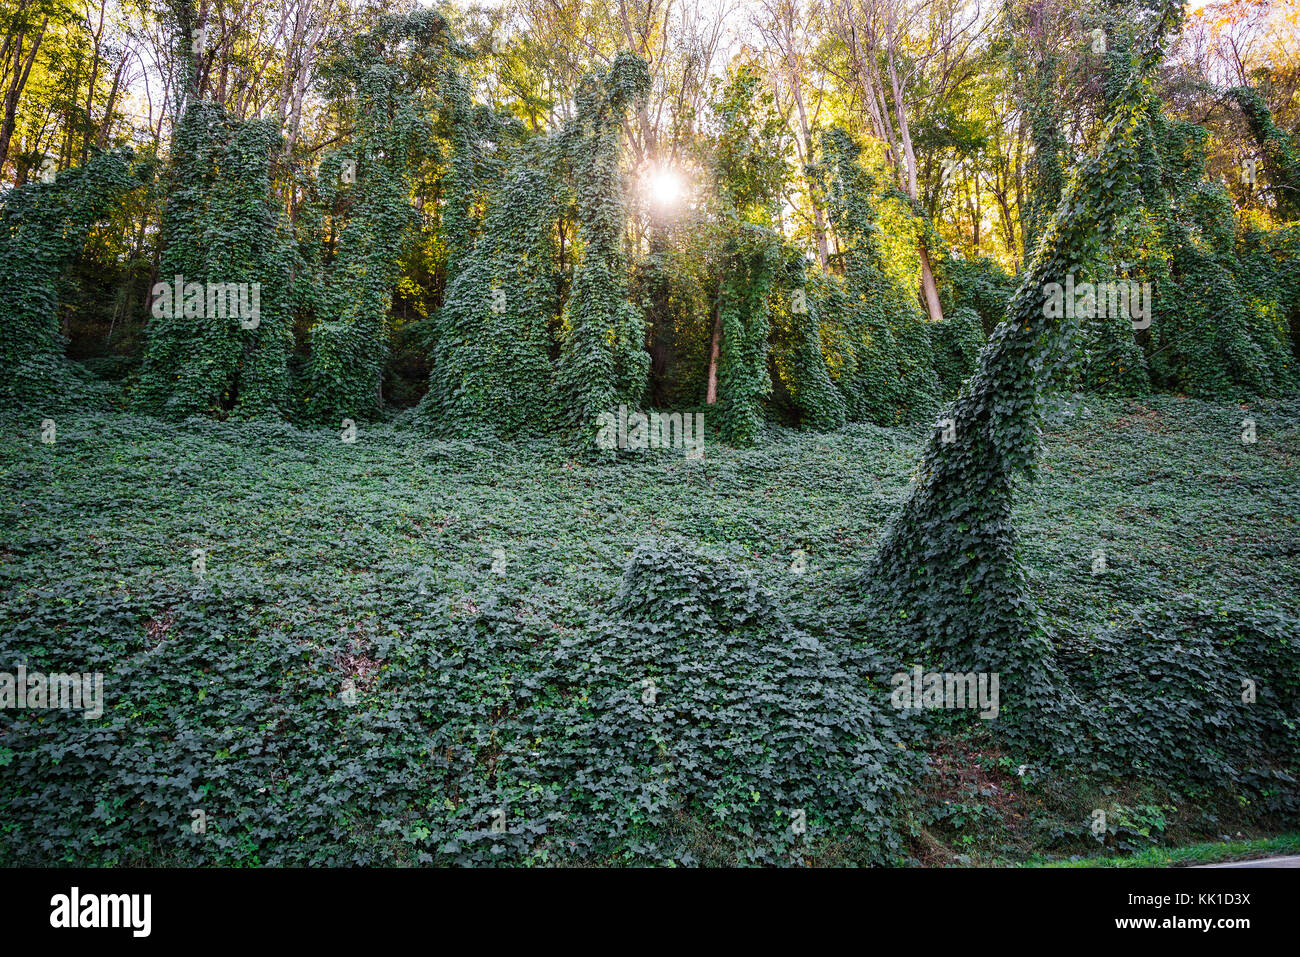 Invasive Kudzu vine invades the Great Smoky Mountains National Park, in North Carolina. Stock Photo